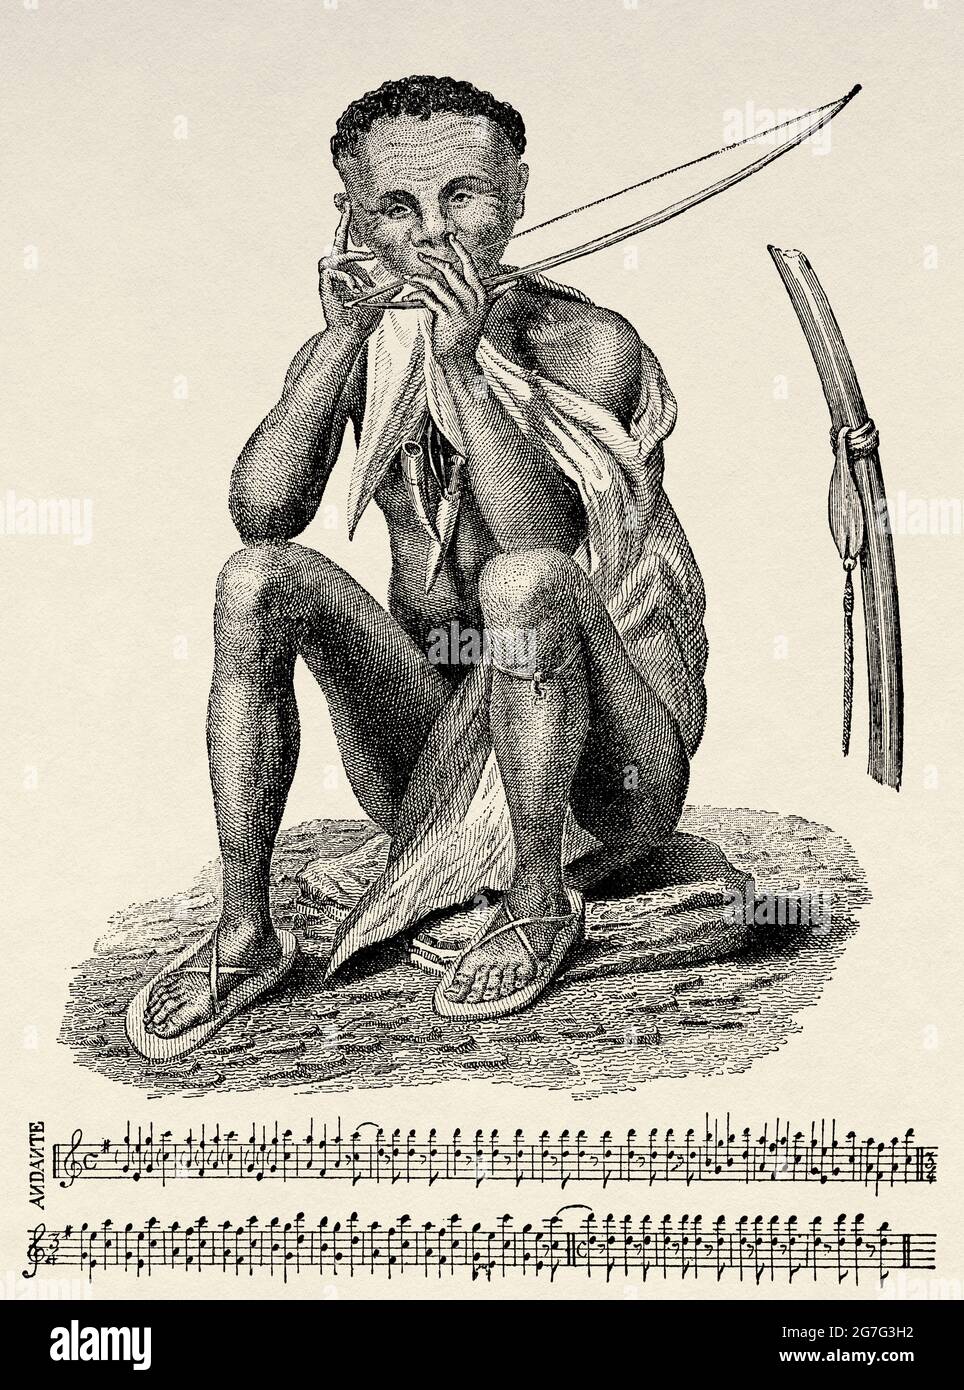 San or Bushman man playing a gorah (musical bow) southern Africa. Old 19th century engraved illustration from El Mundo Ilustrado 1880 Stock Photo